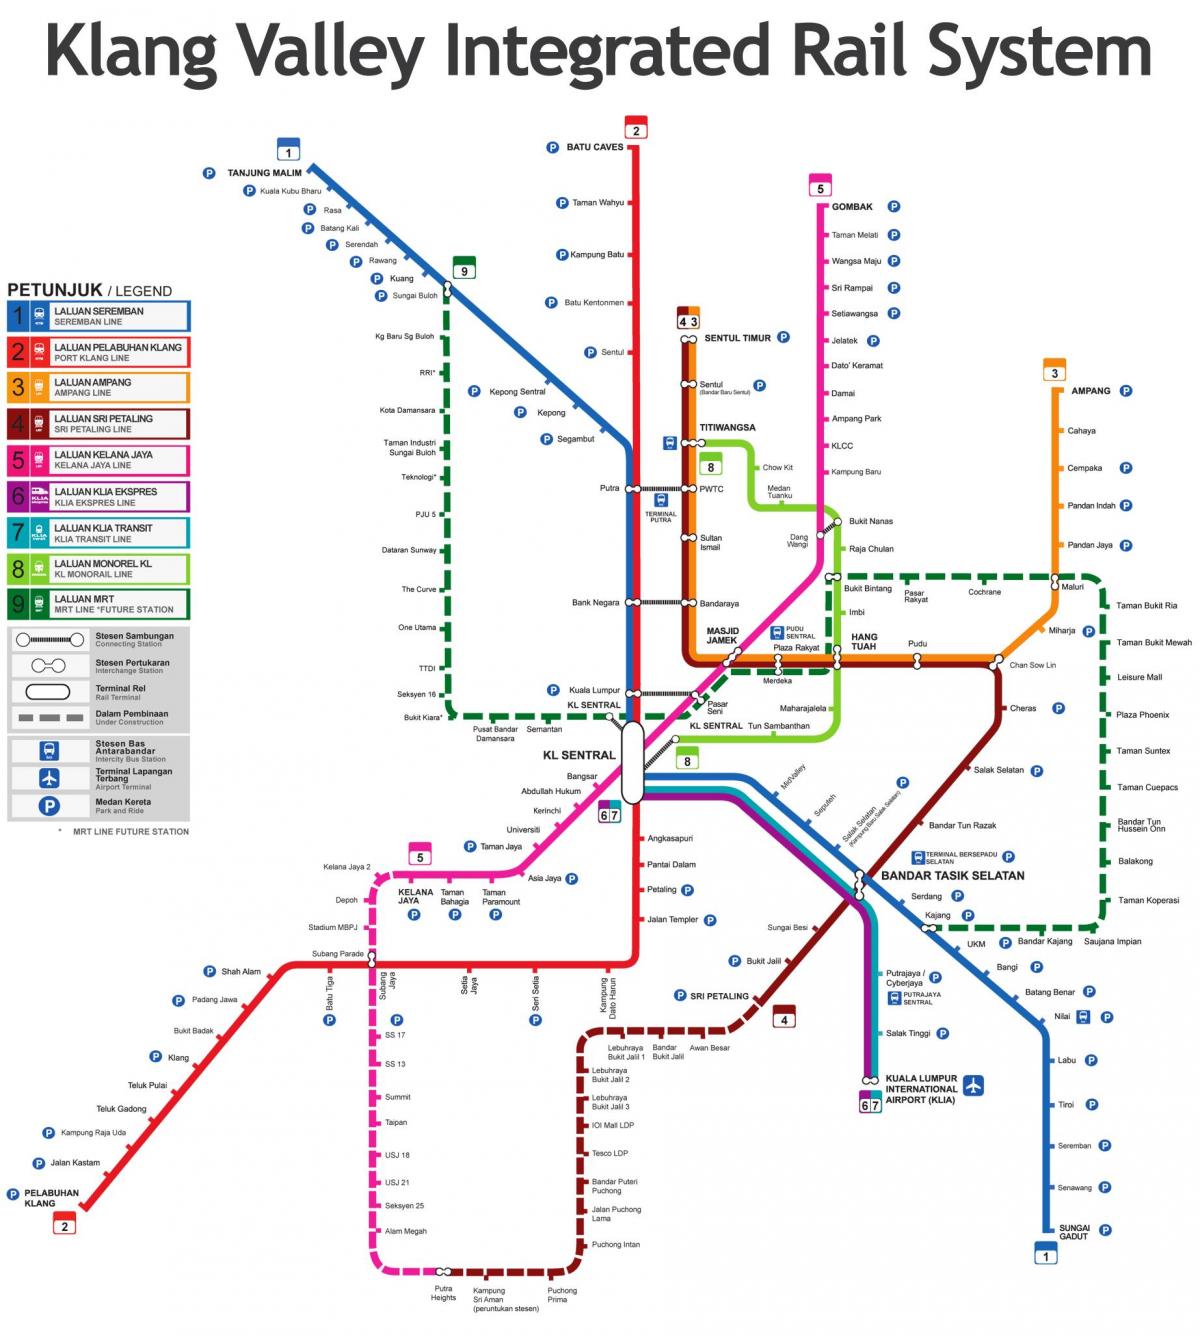 mapa ng tren sa malaysia